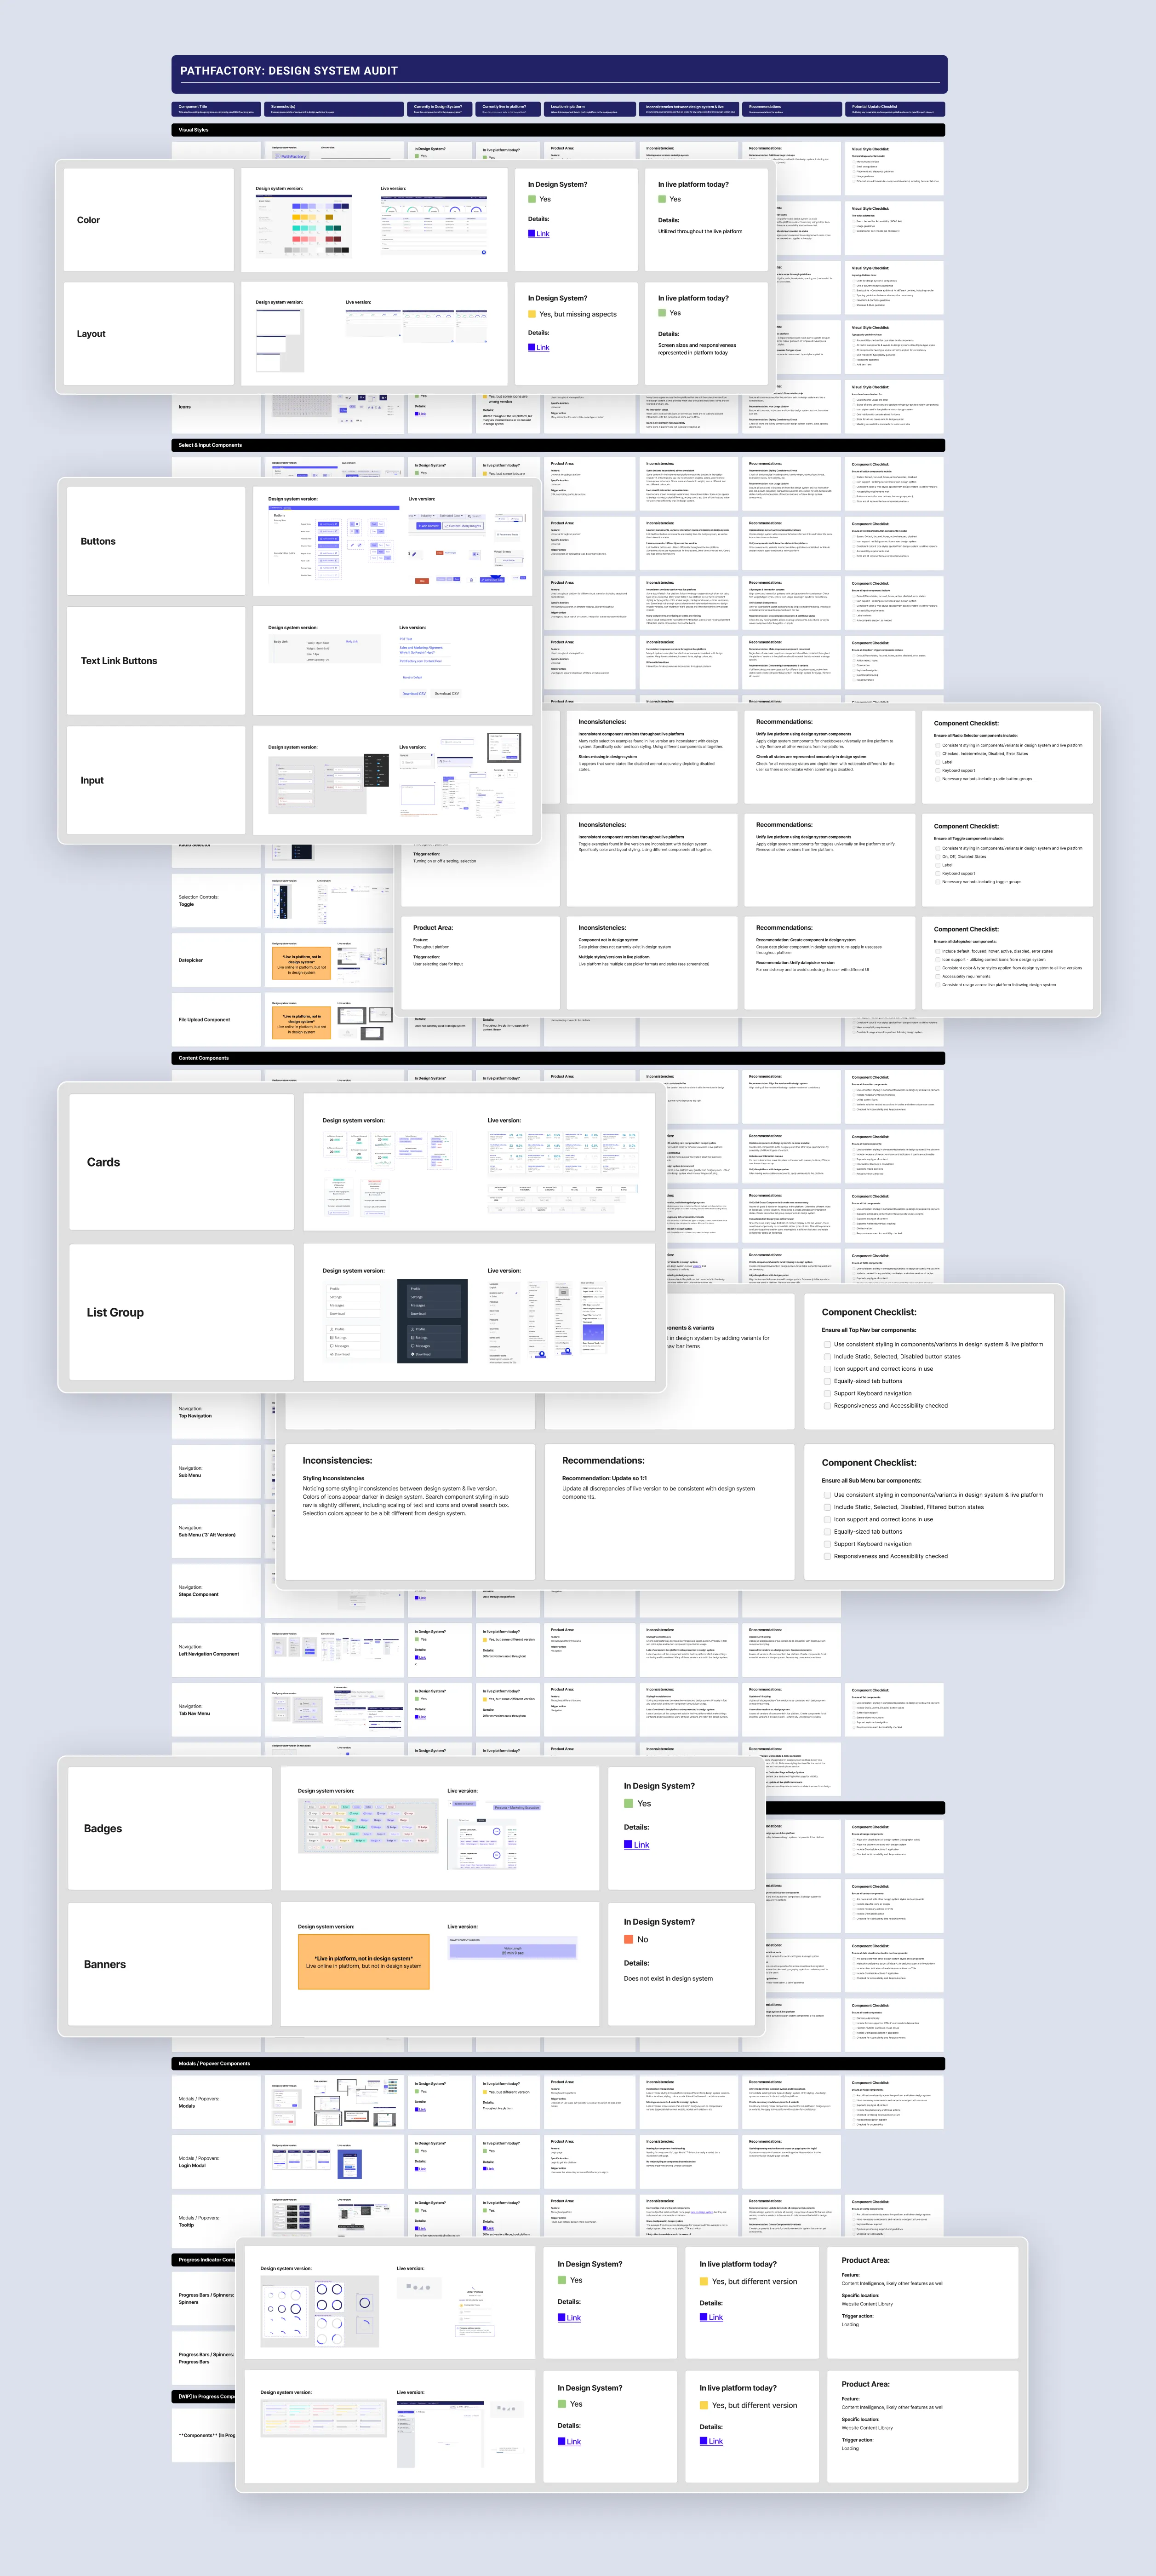 sam-small-design-case-study-pathfactory-product-design-audit-full-long-scroll-v01